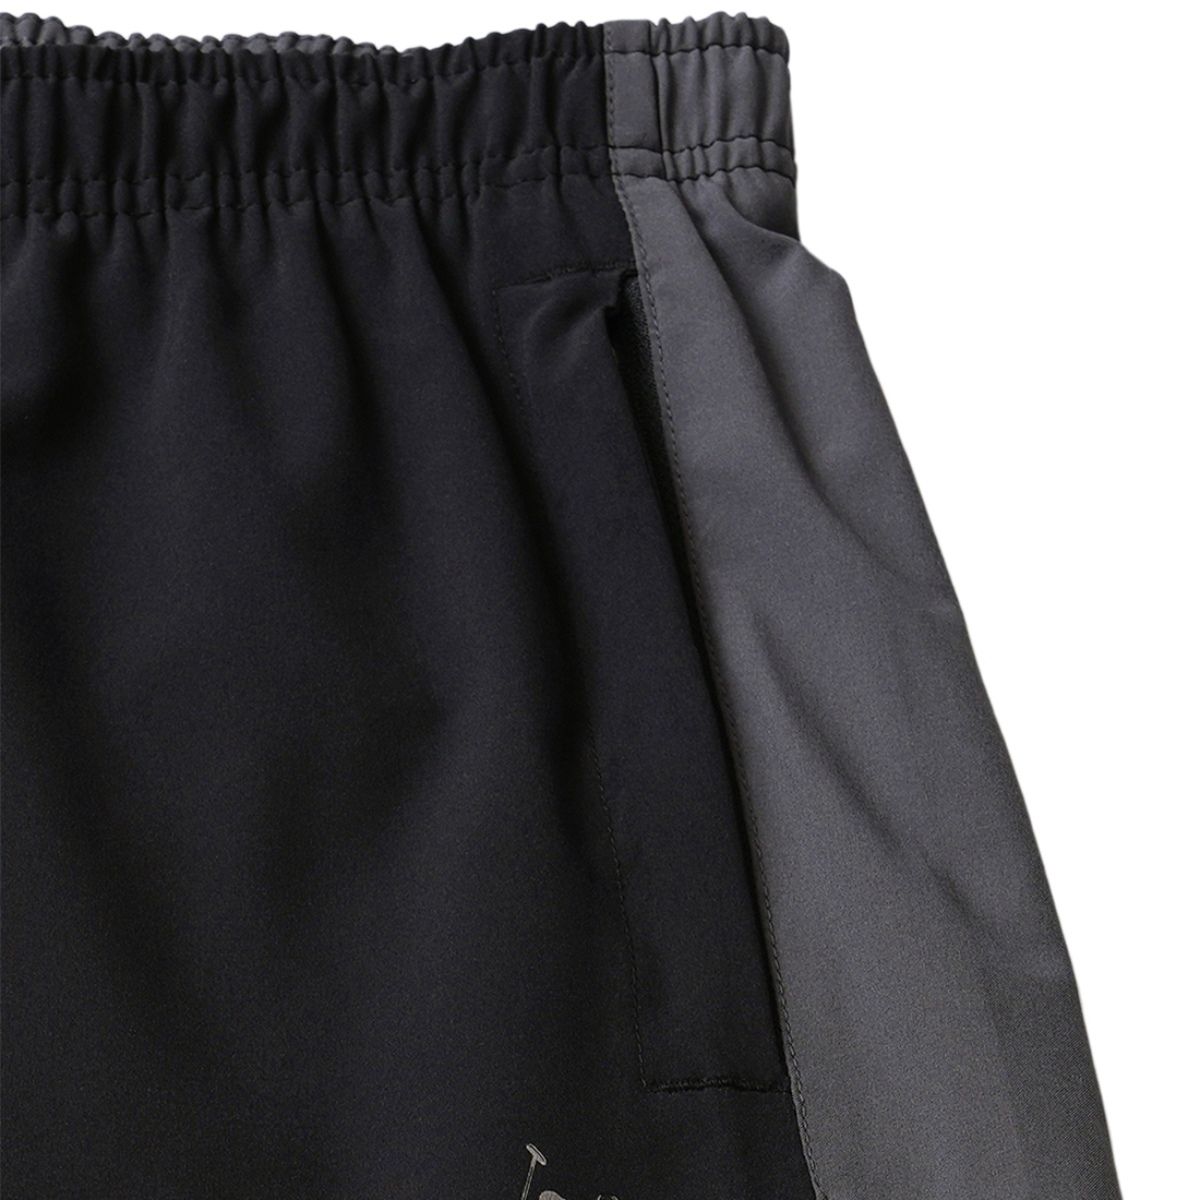 Kids Boys Plain Sports Polyester Track Pants Bottoms Black/Navy 6-15 Years  | eBay